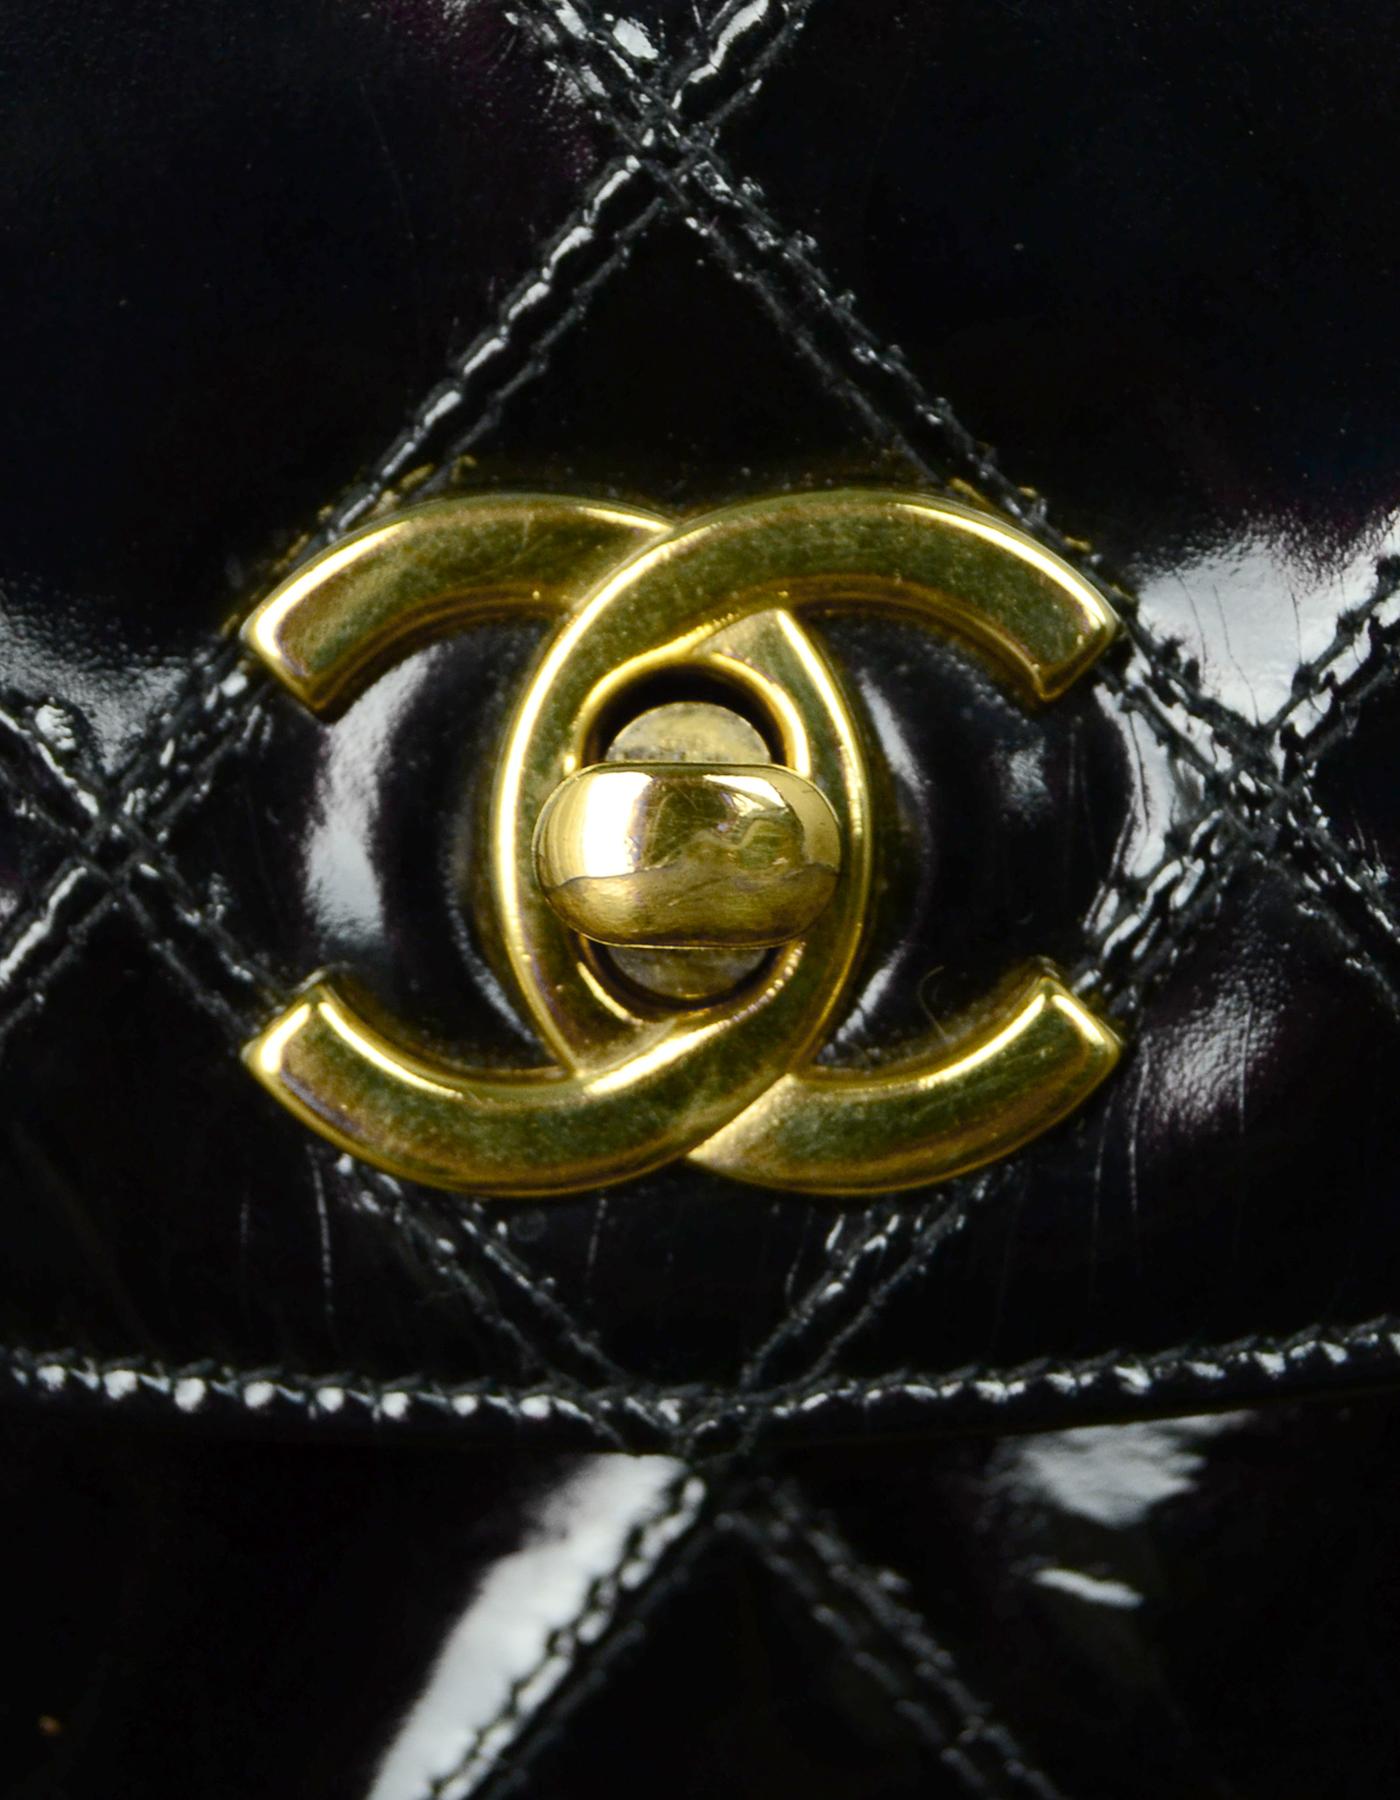 Chanel '90 Vintage Black Patent Quilted CC Twistlock Belt Bag sz 26